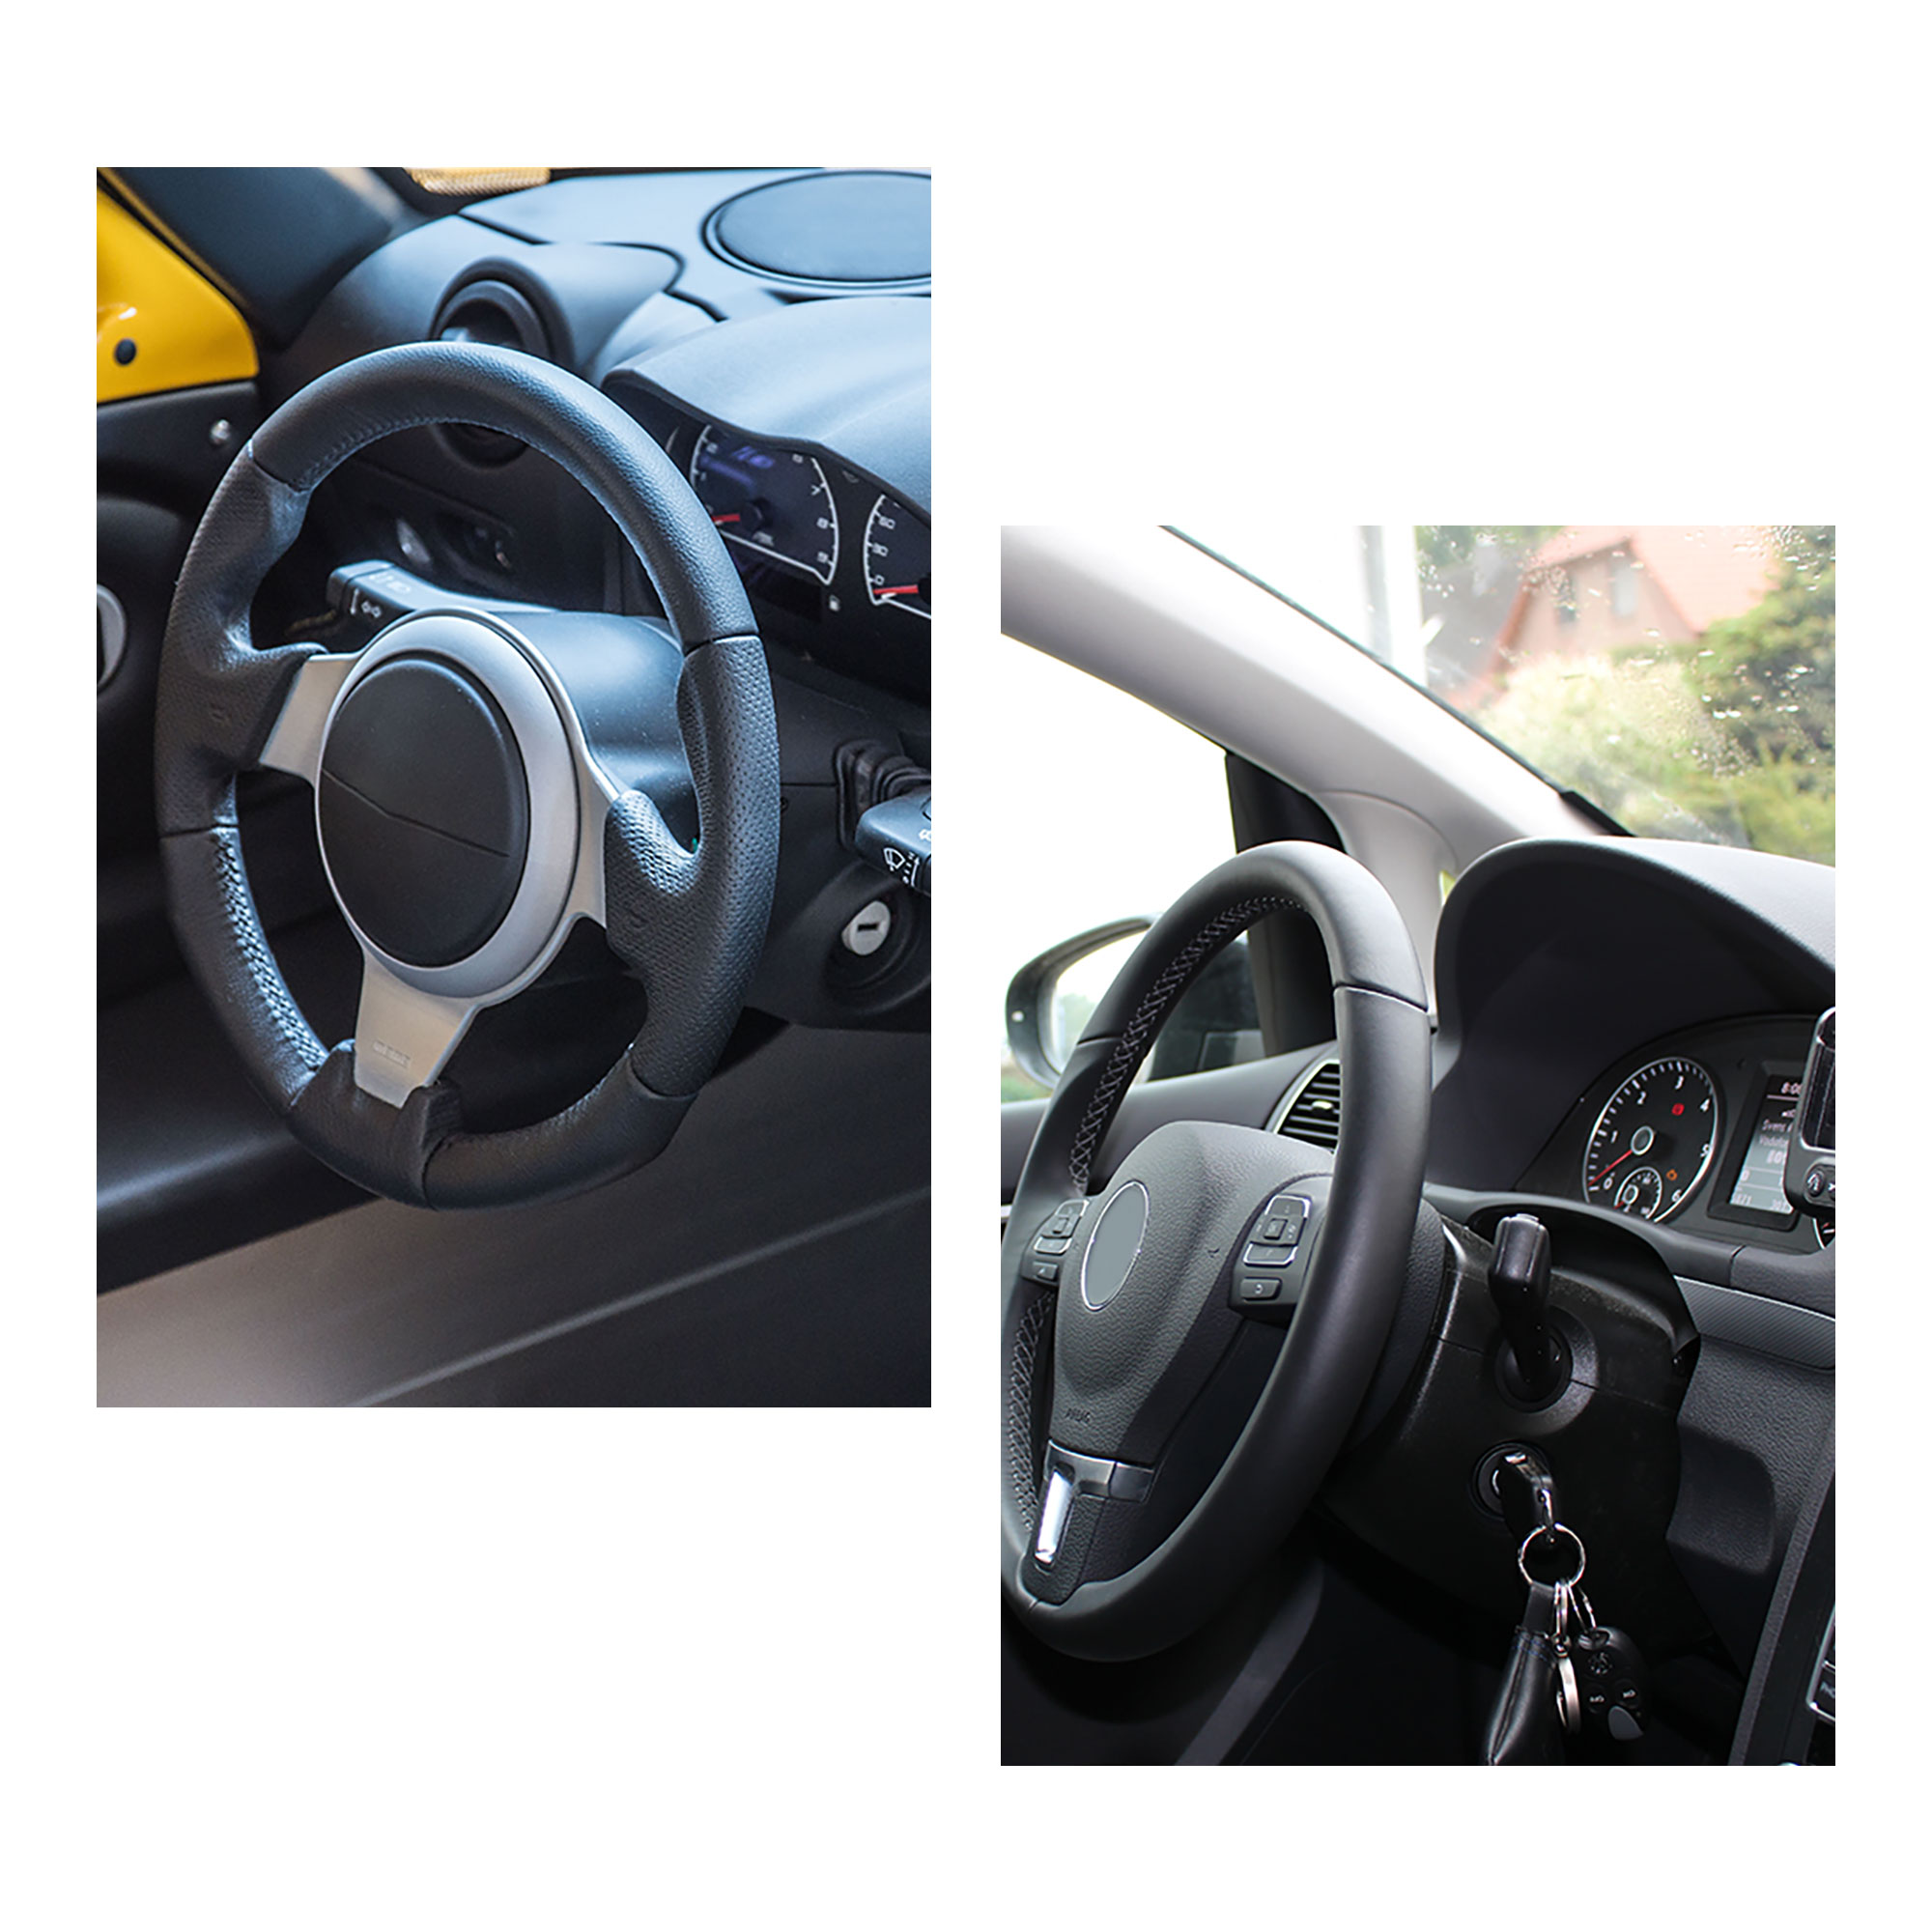 Unique Bargains Safety Steering Wheel Anti Theft Lock Bar Black Yellow w 3 Keys for Car